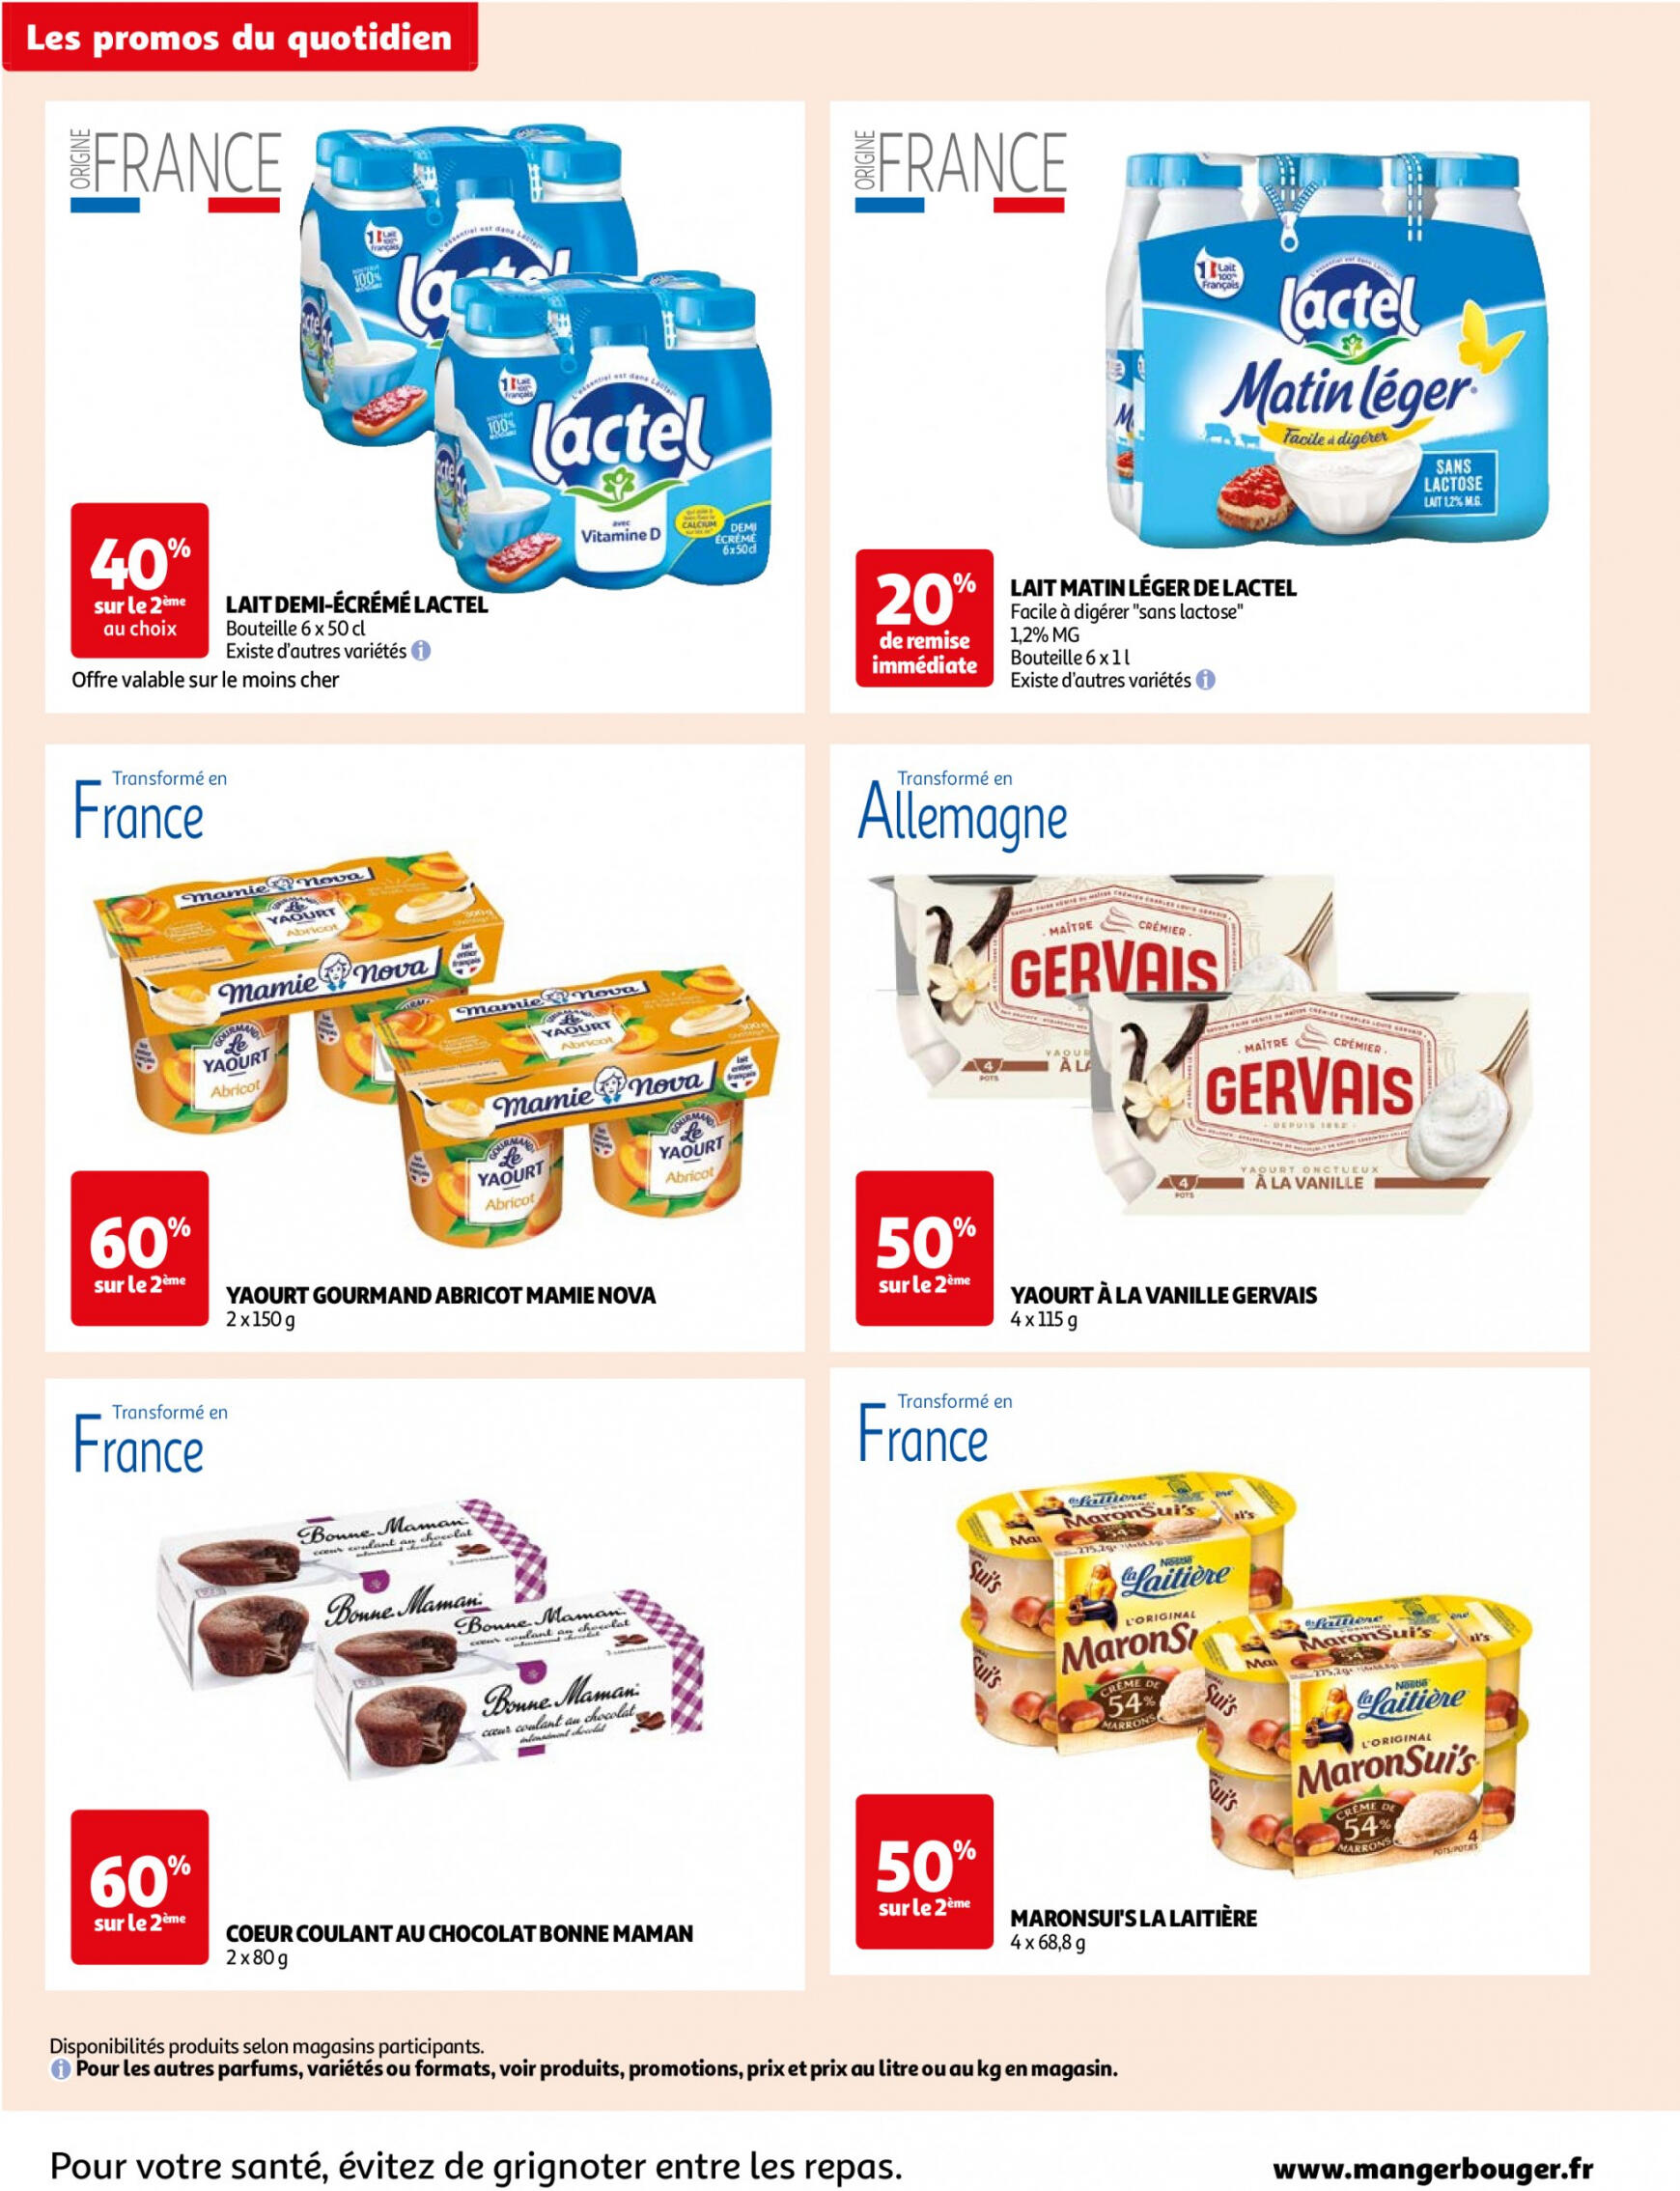 auchan - Auchan - Supermarché folder huidig 14.05. - 02.06. - page: 6